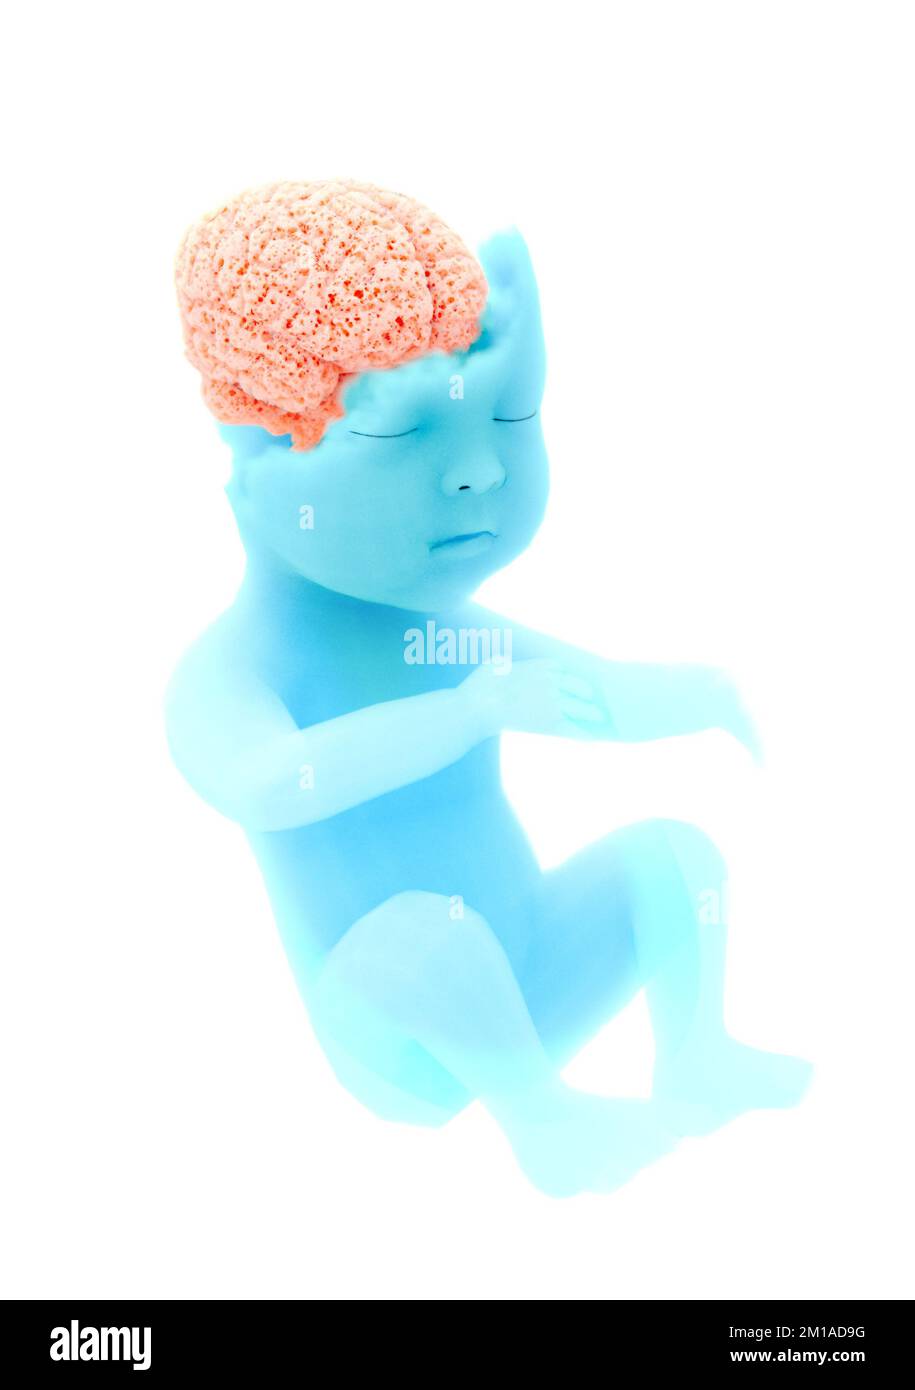 Kind, Fötus, Organbildung. Schwamm-Effekt-Gehirn. Sensorische Expansion lernen. Mutterleib, Geburt. 3D-Rendering Stockfoto